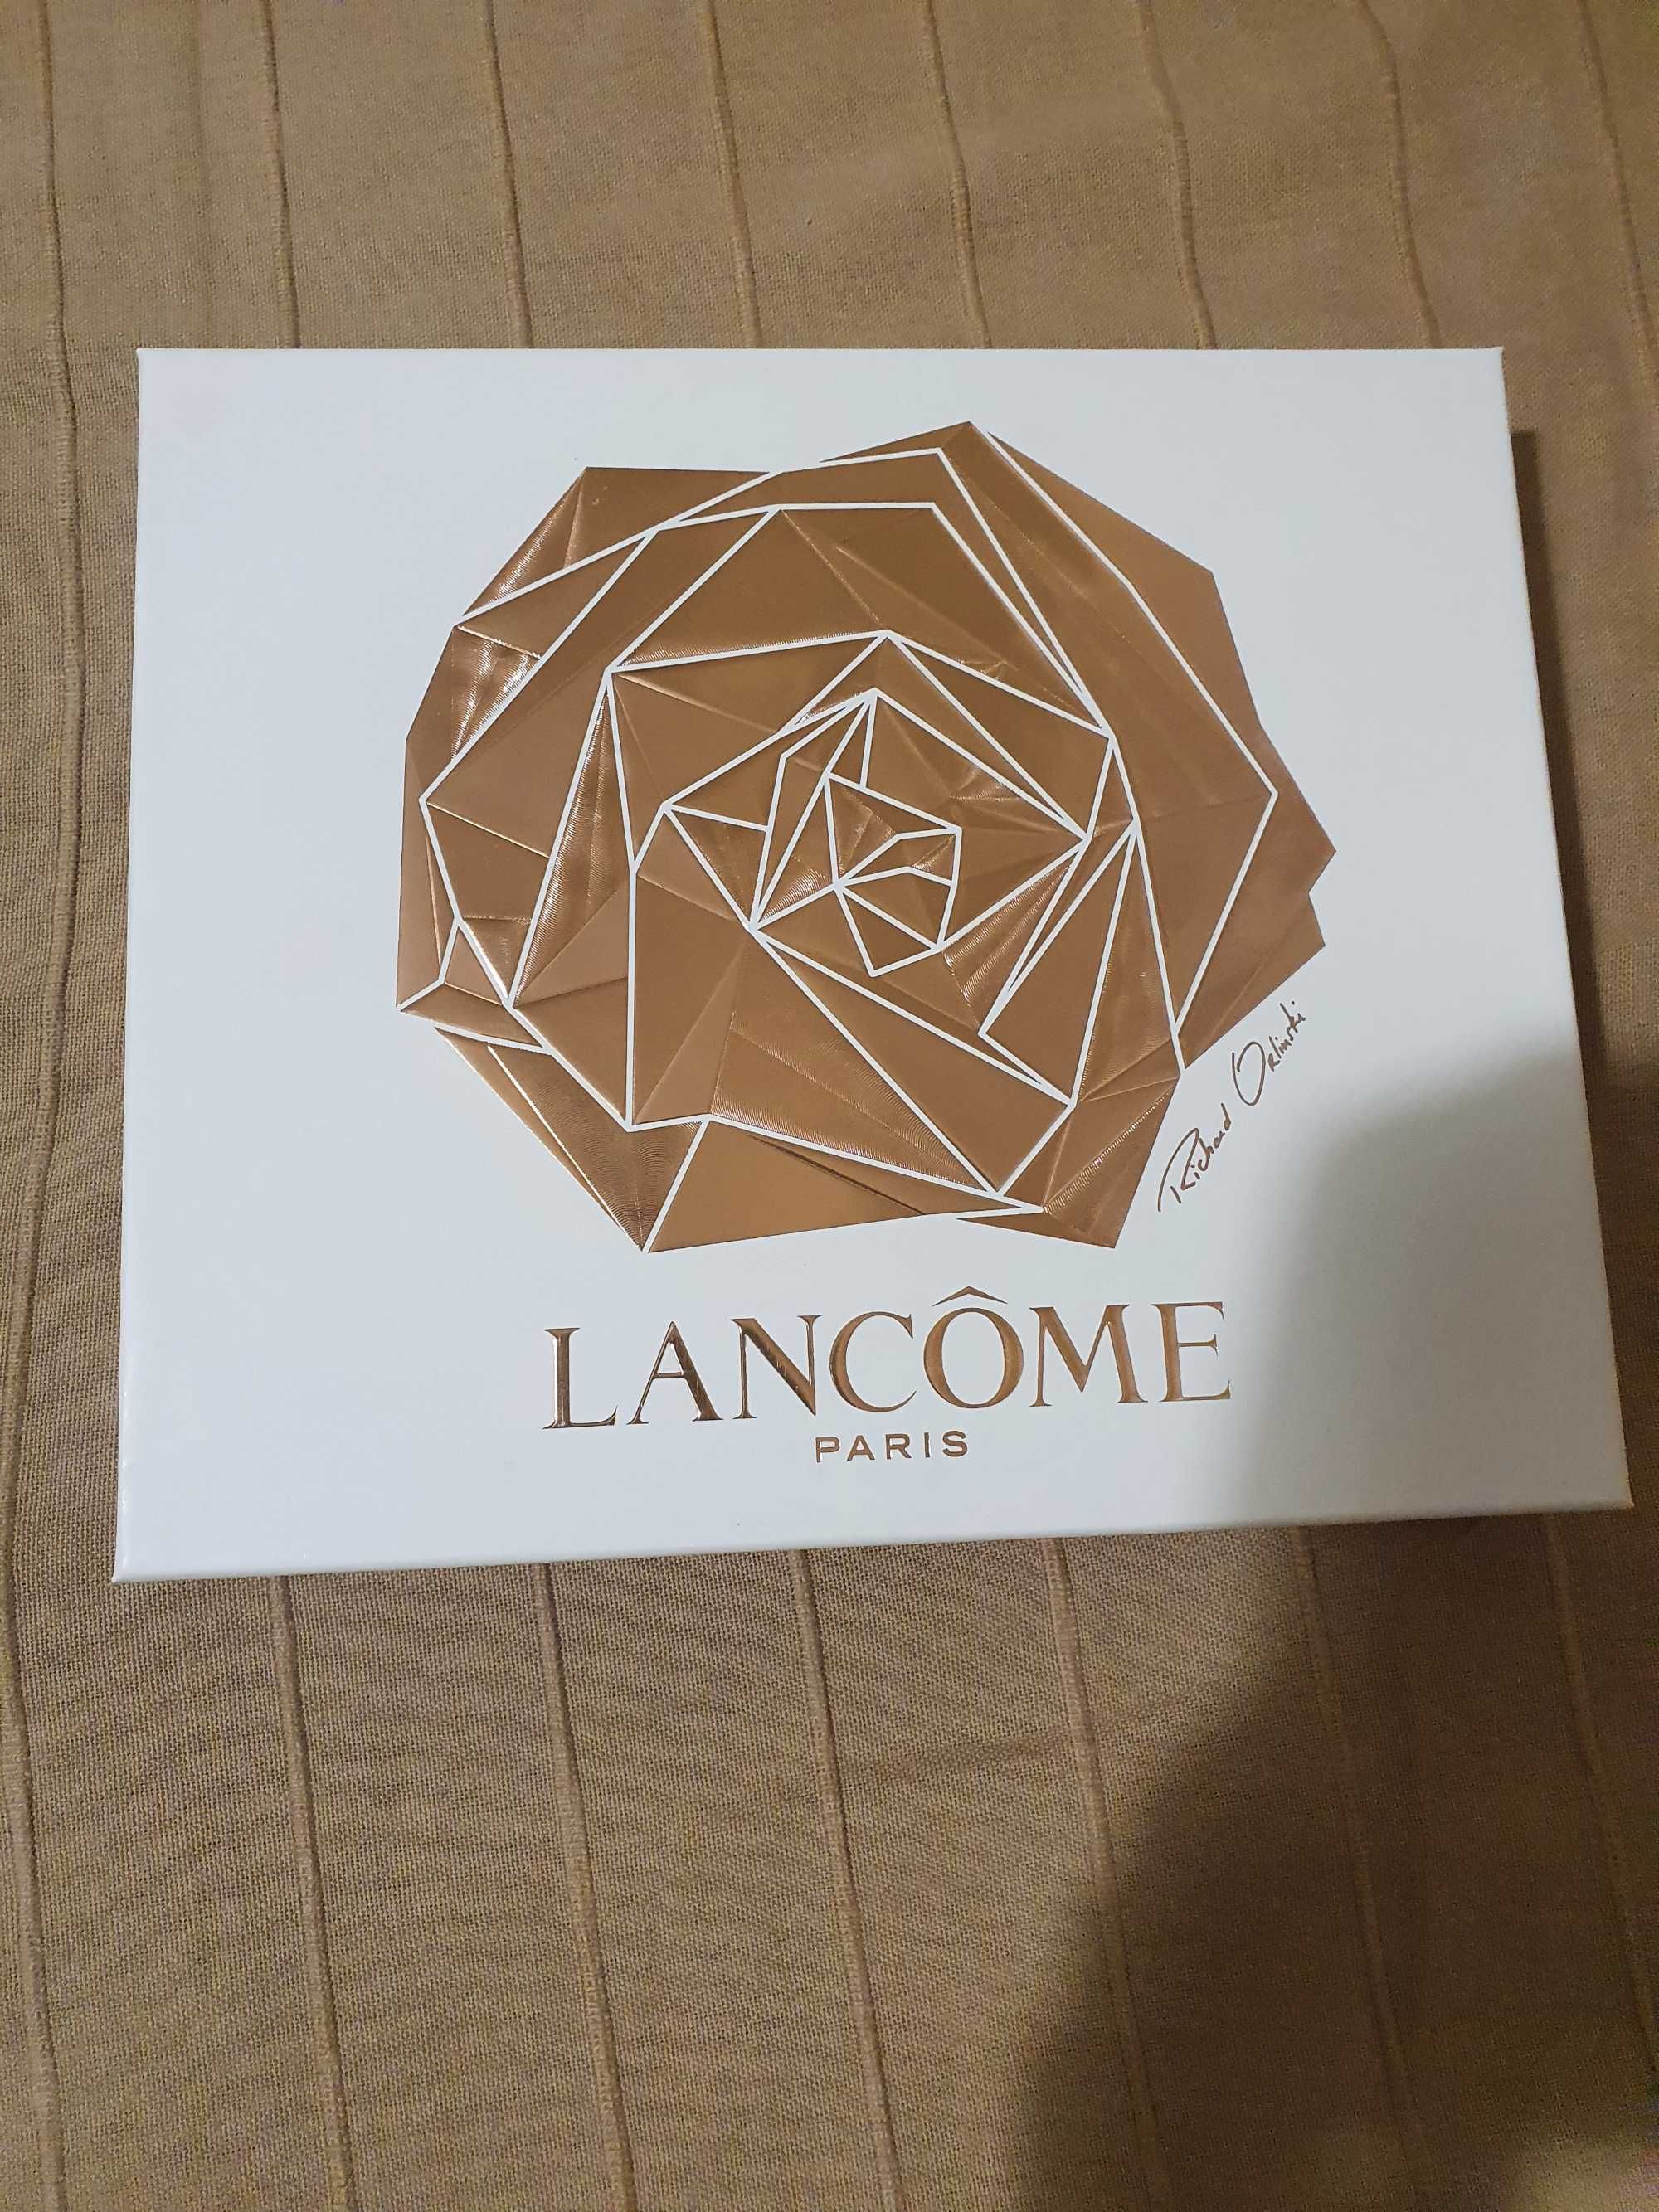 Parfum Idole -Lancome - caseta